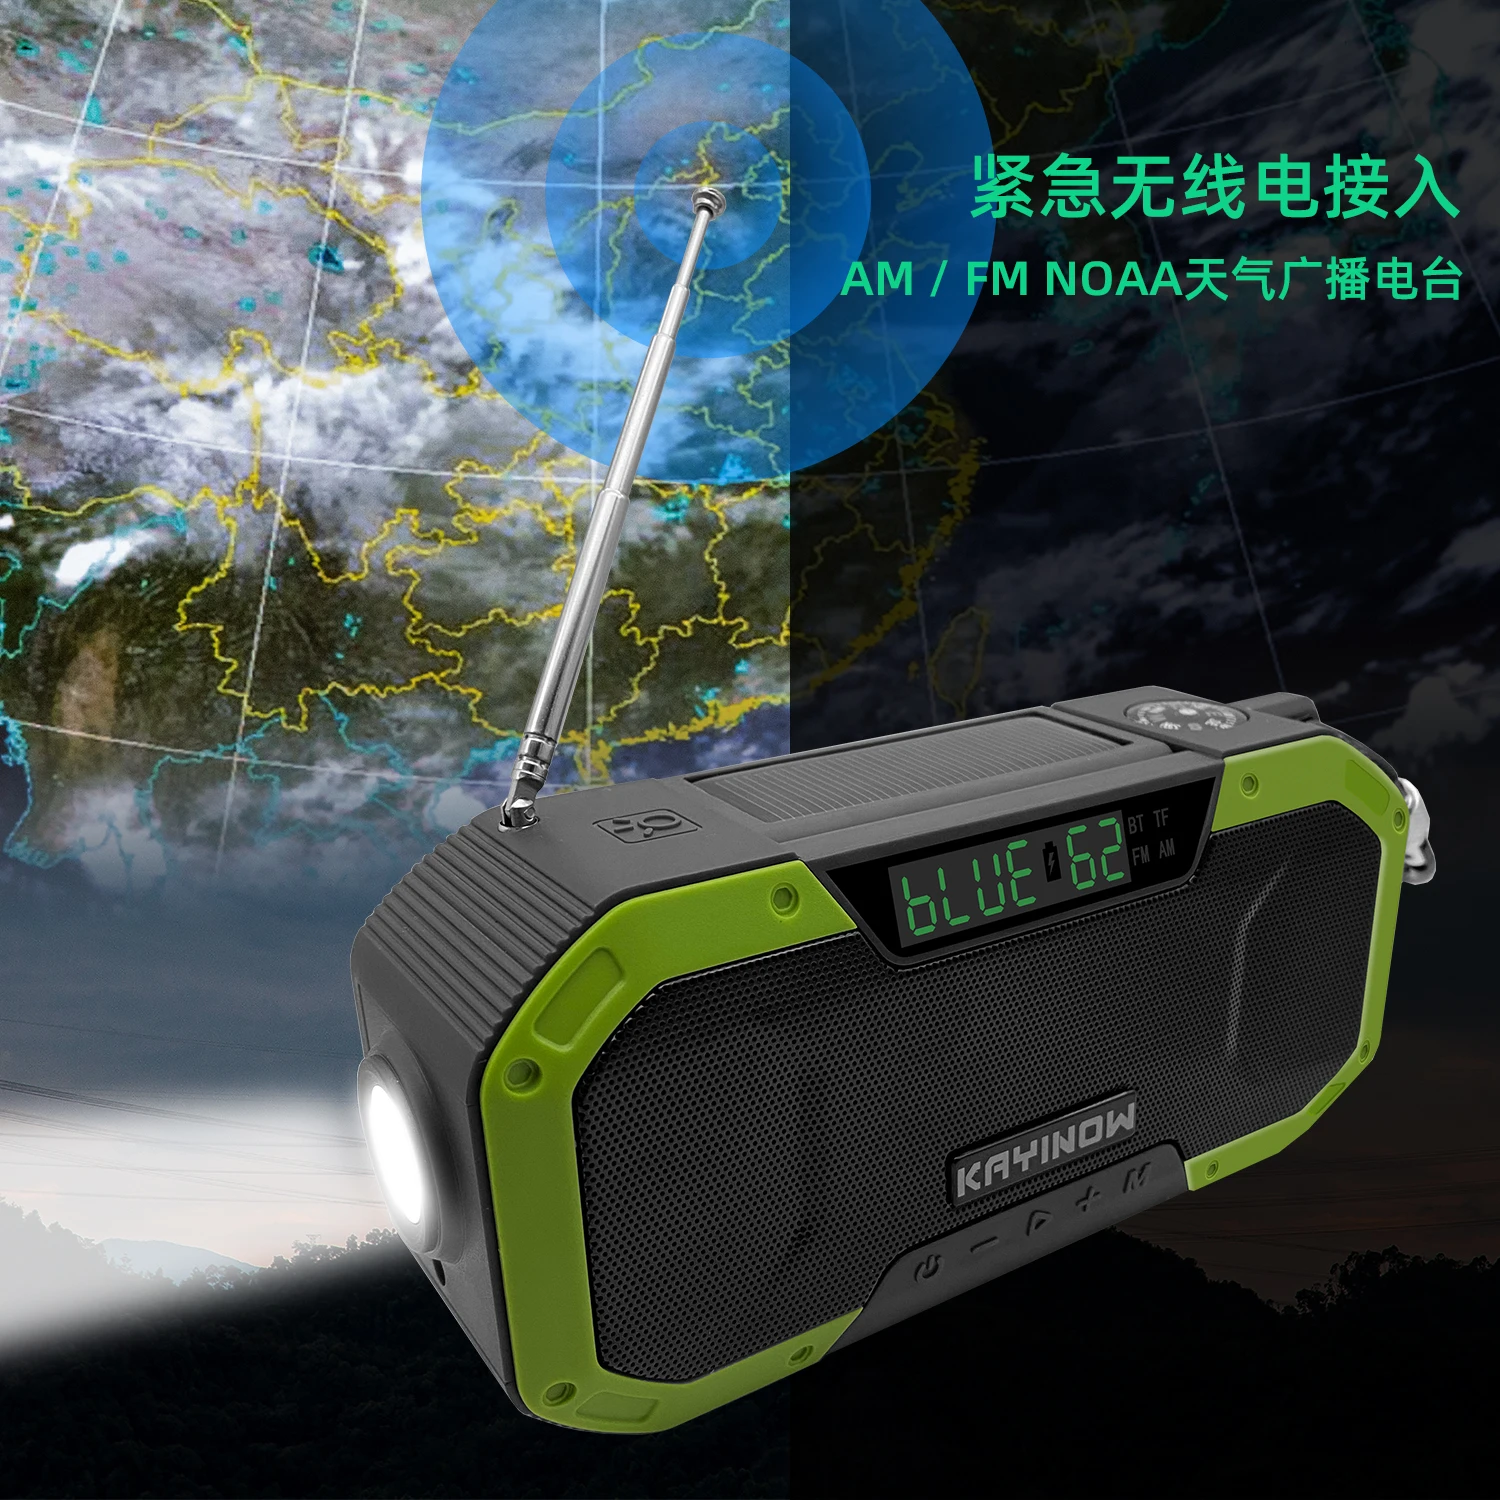 
KAYINOW D580 Portable Multifunctional Radio Speakers with Solar Hand Crank Radio Outdoor Waterproof with Flashlight,Power Bank 